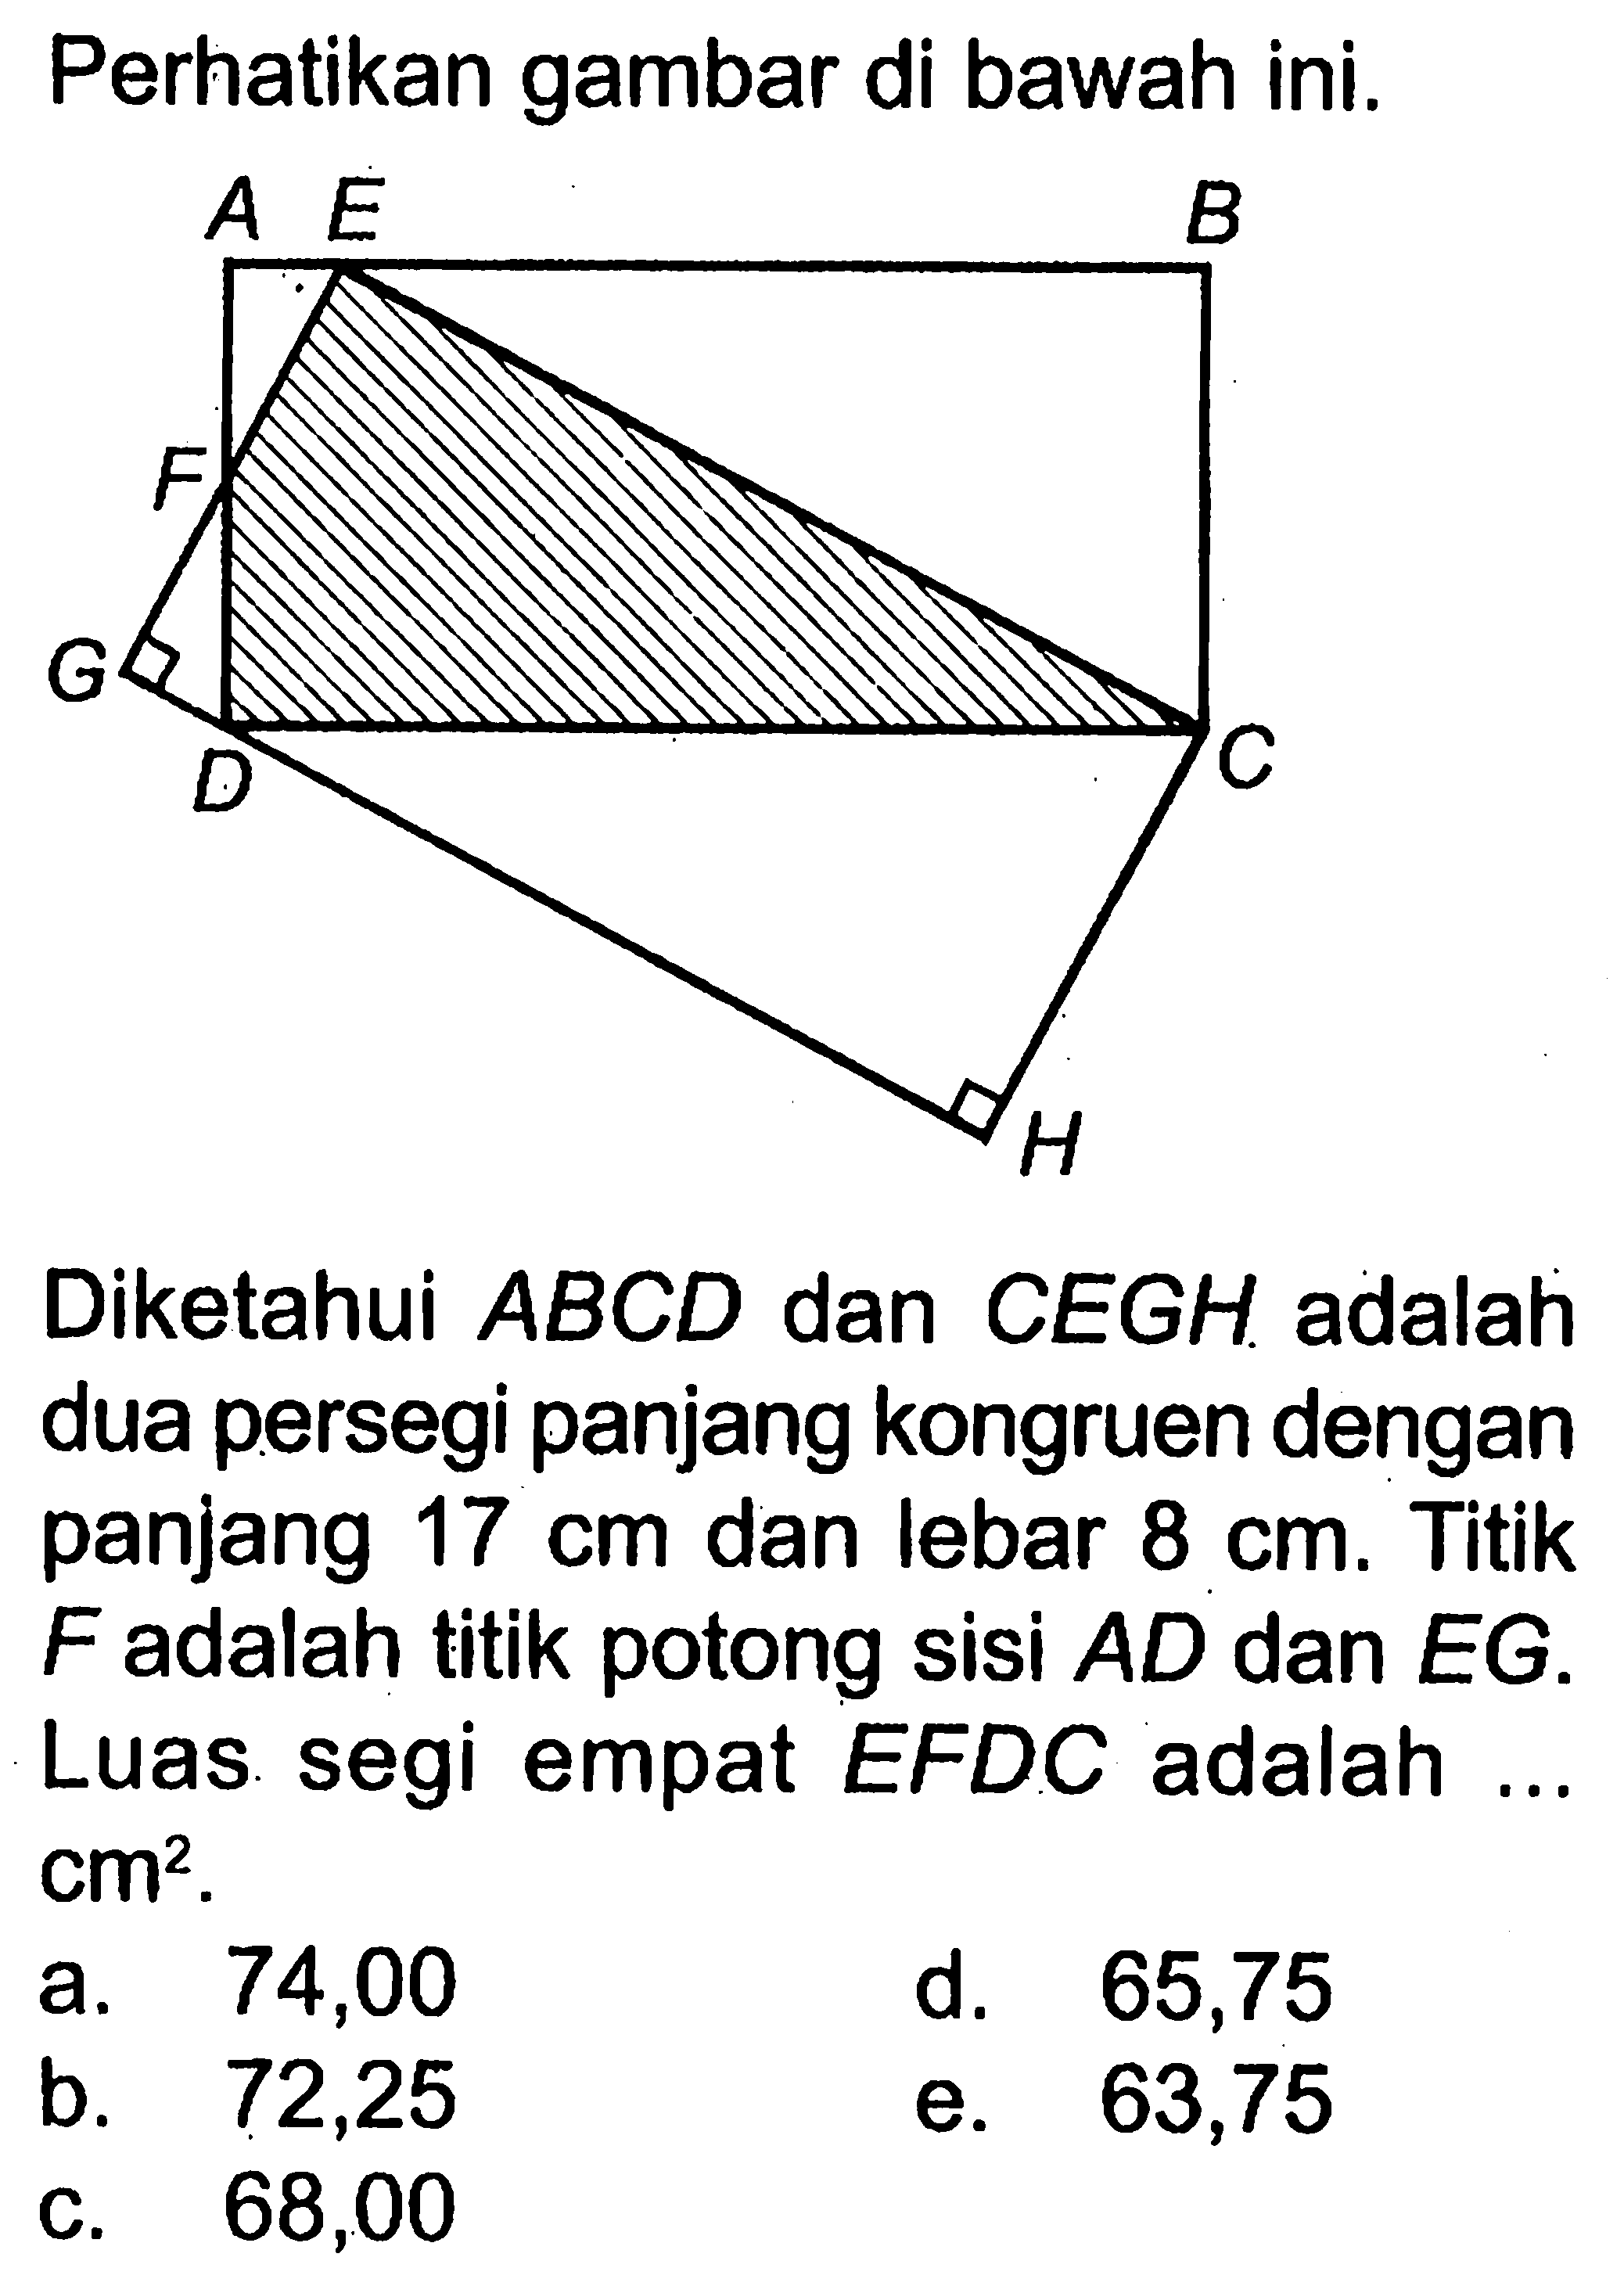 Perhatikan gambar di bawah ini.Diketahui  ABCD  dan  CEGH  adalah dua persegi panjang kongruen dengan panjang  17 cm  dan lebar  8 cm . Titik  F  adalah titik potong sisi  AD  dan  EG  Luas segi empat  EFDC  adalah ...  cm^2 